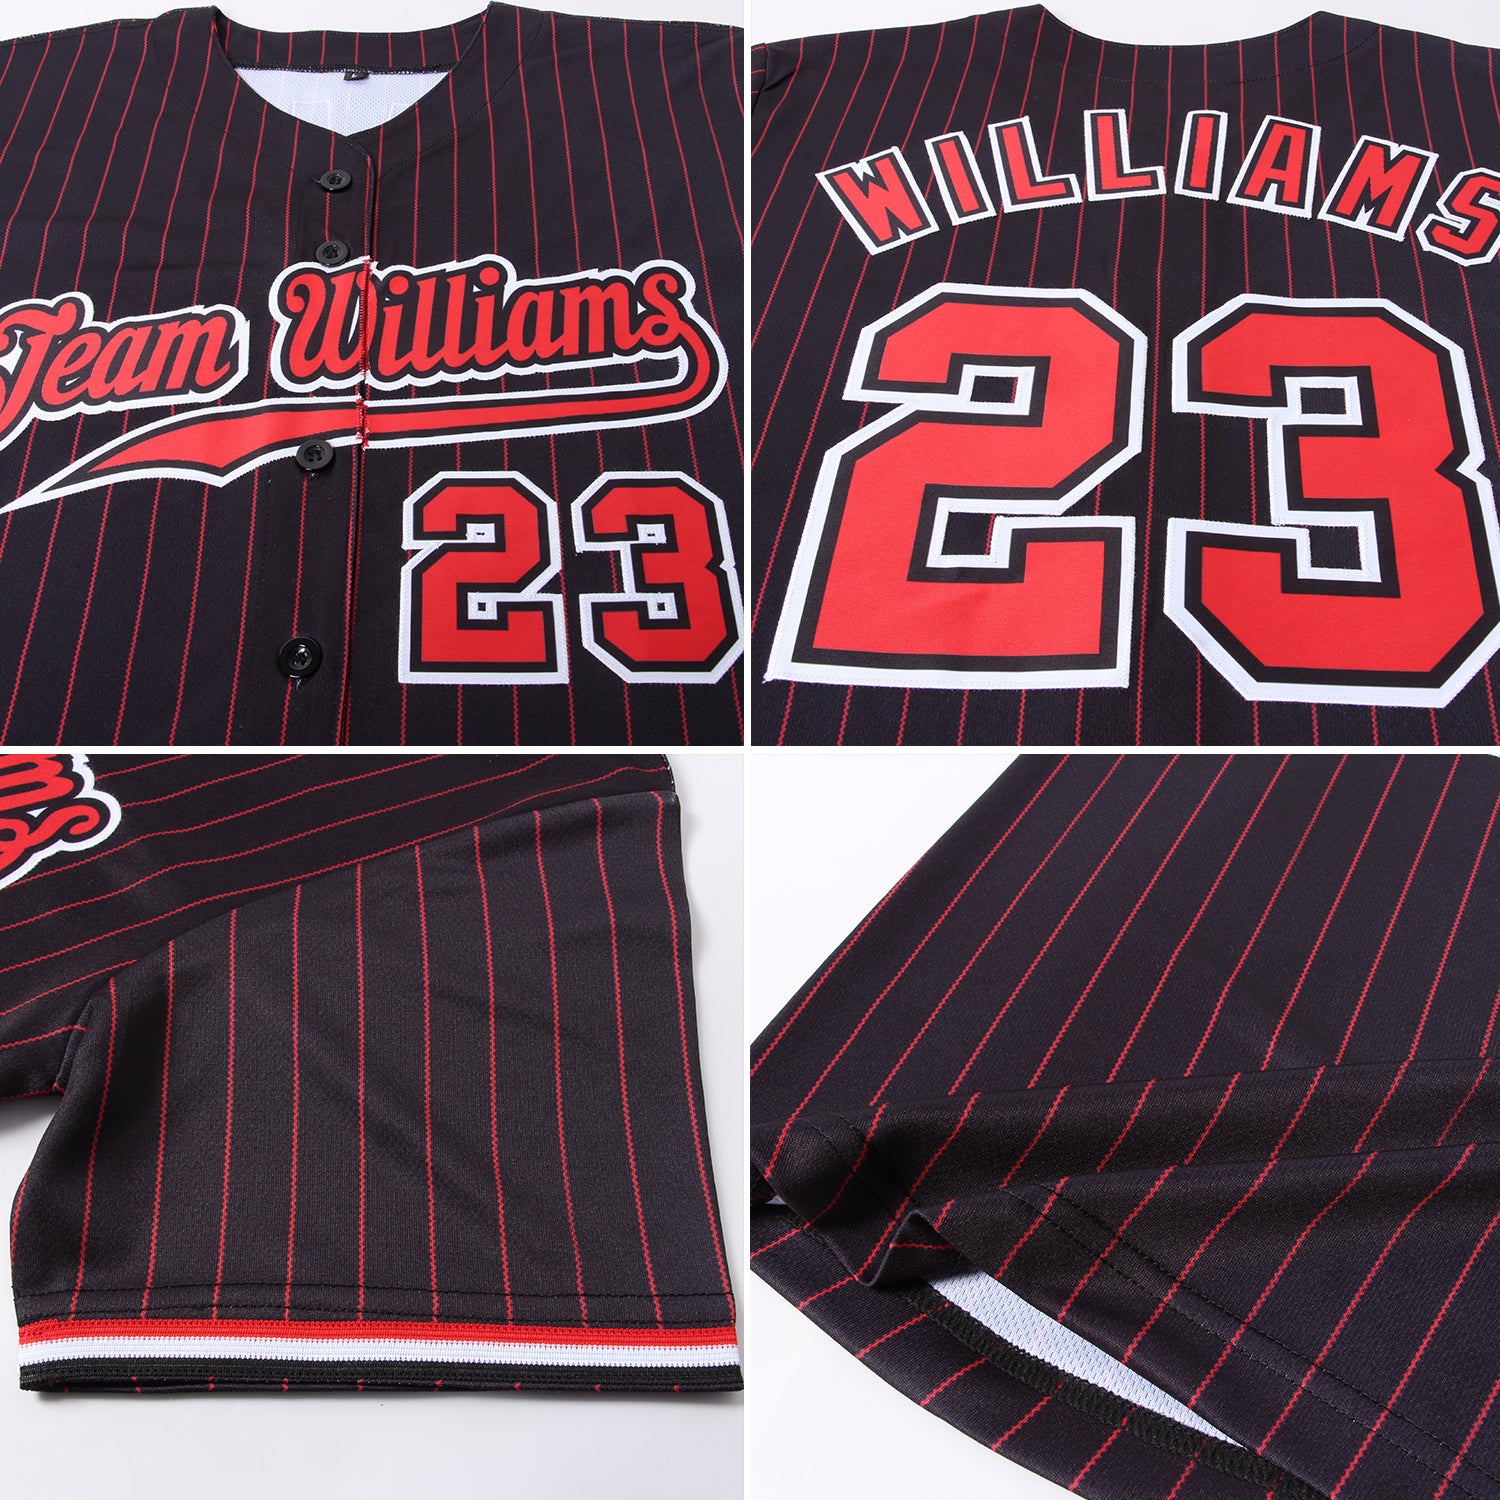 Custom Red Black Strip Black-White Authentic Baseball Jersey Discount